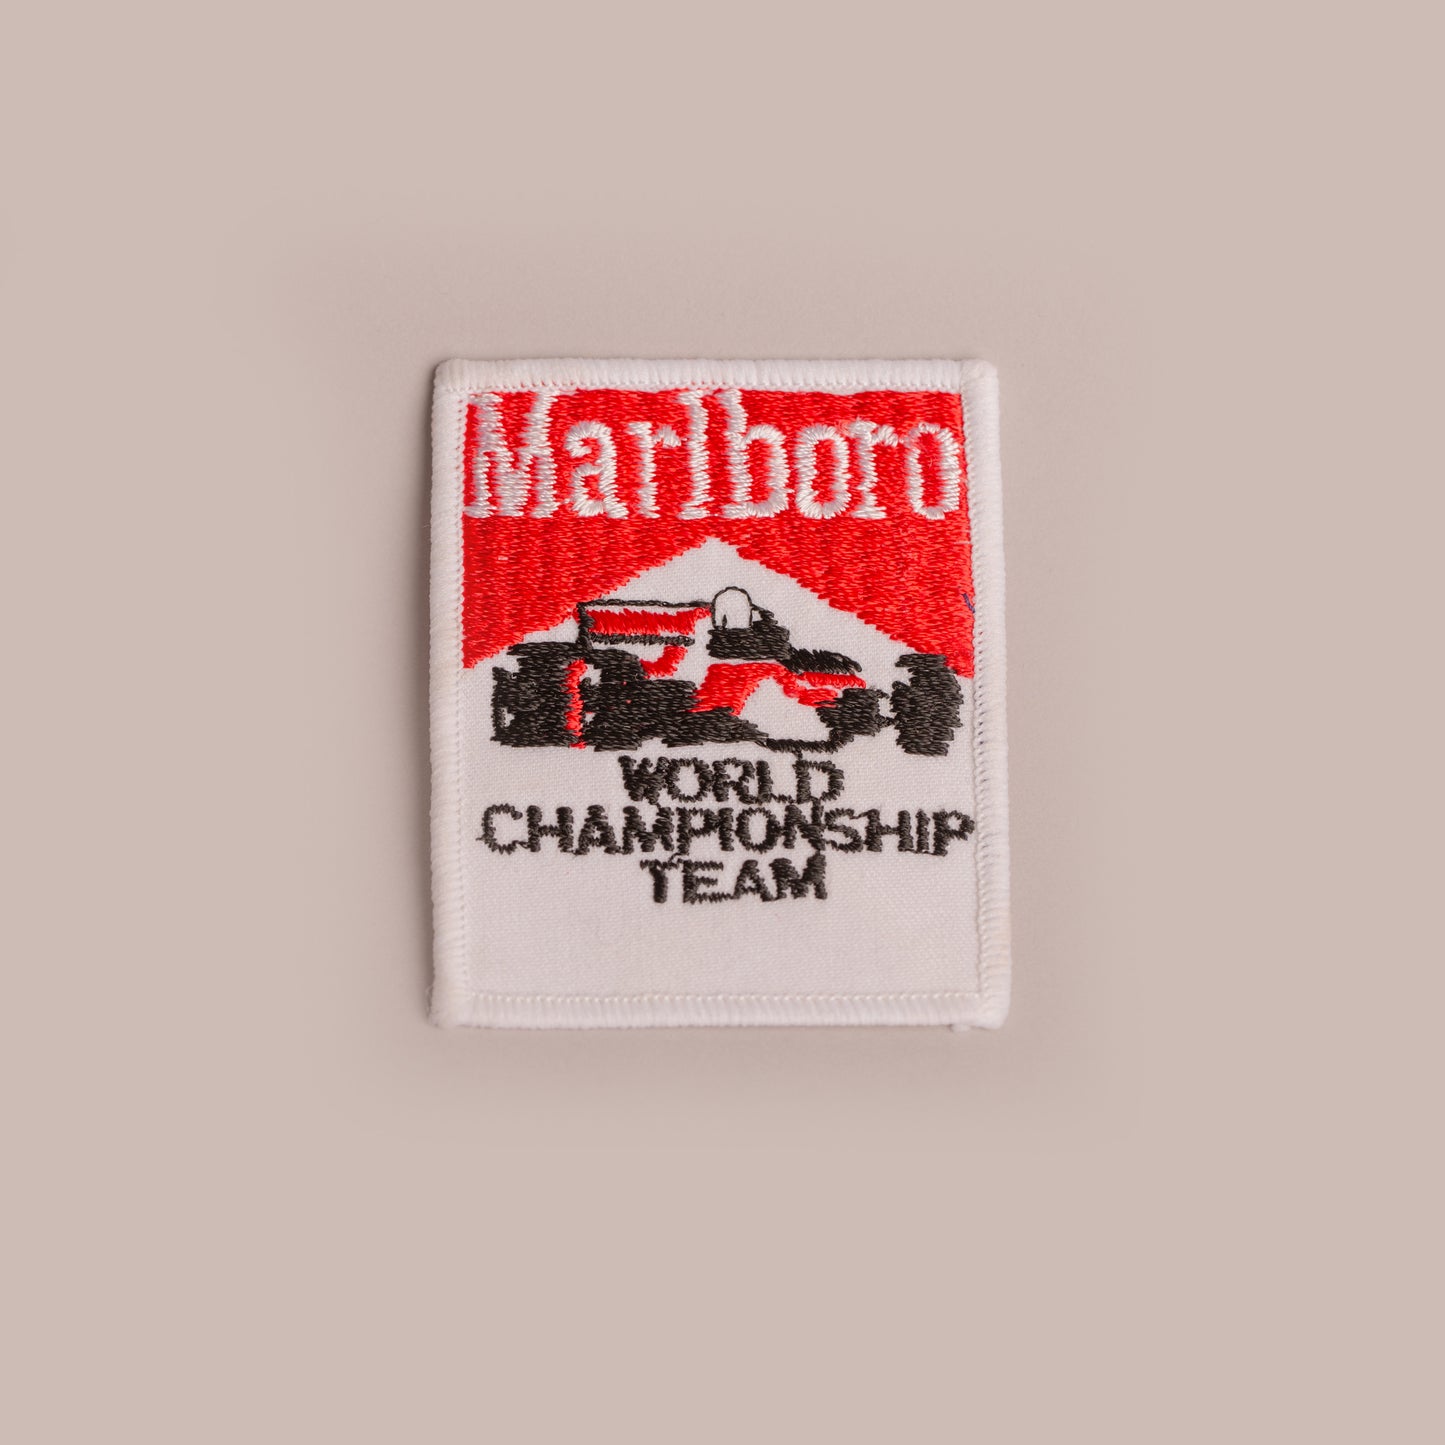 Vintage Patch - Marlboro World Championship Team